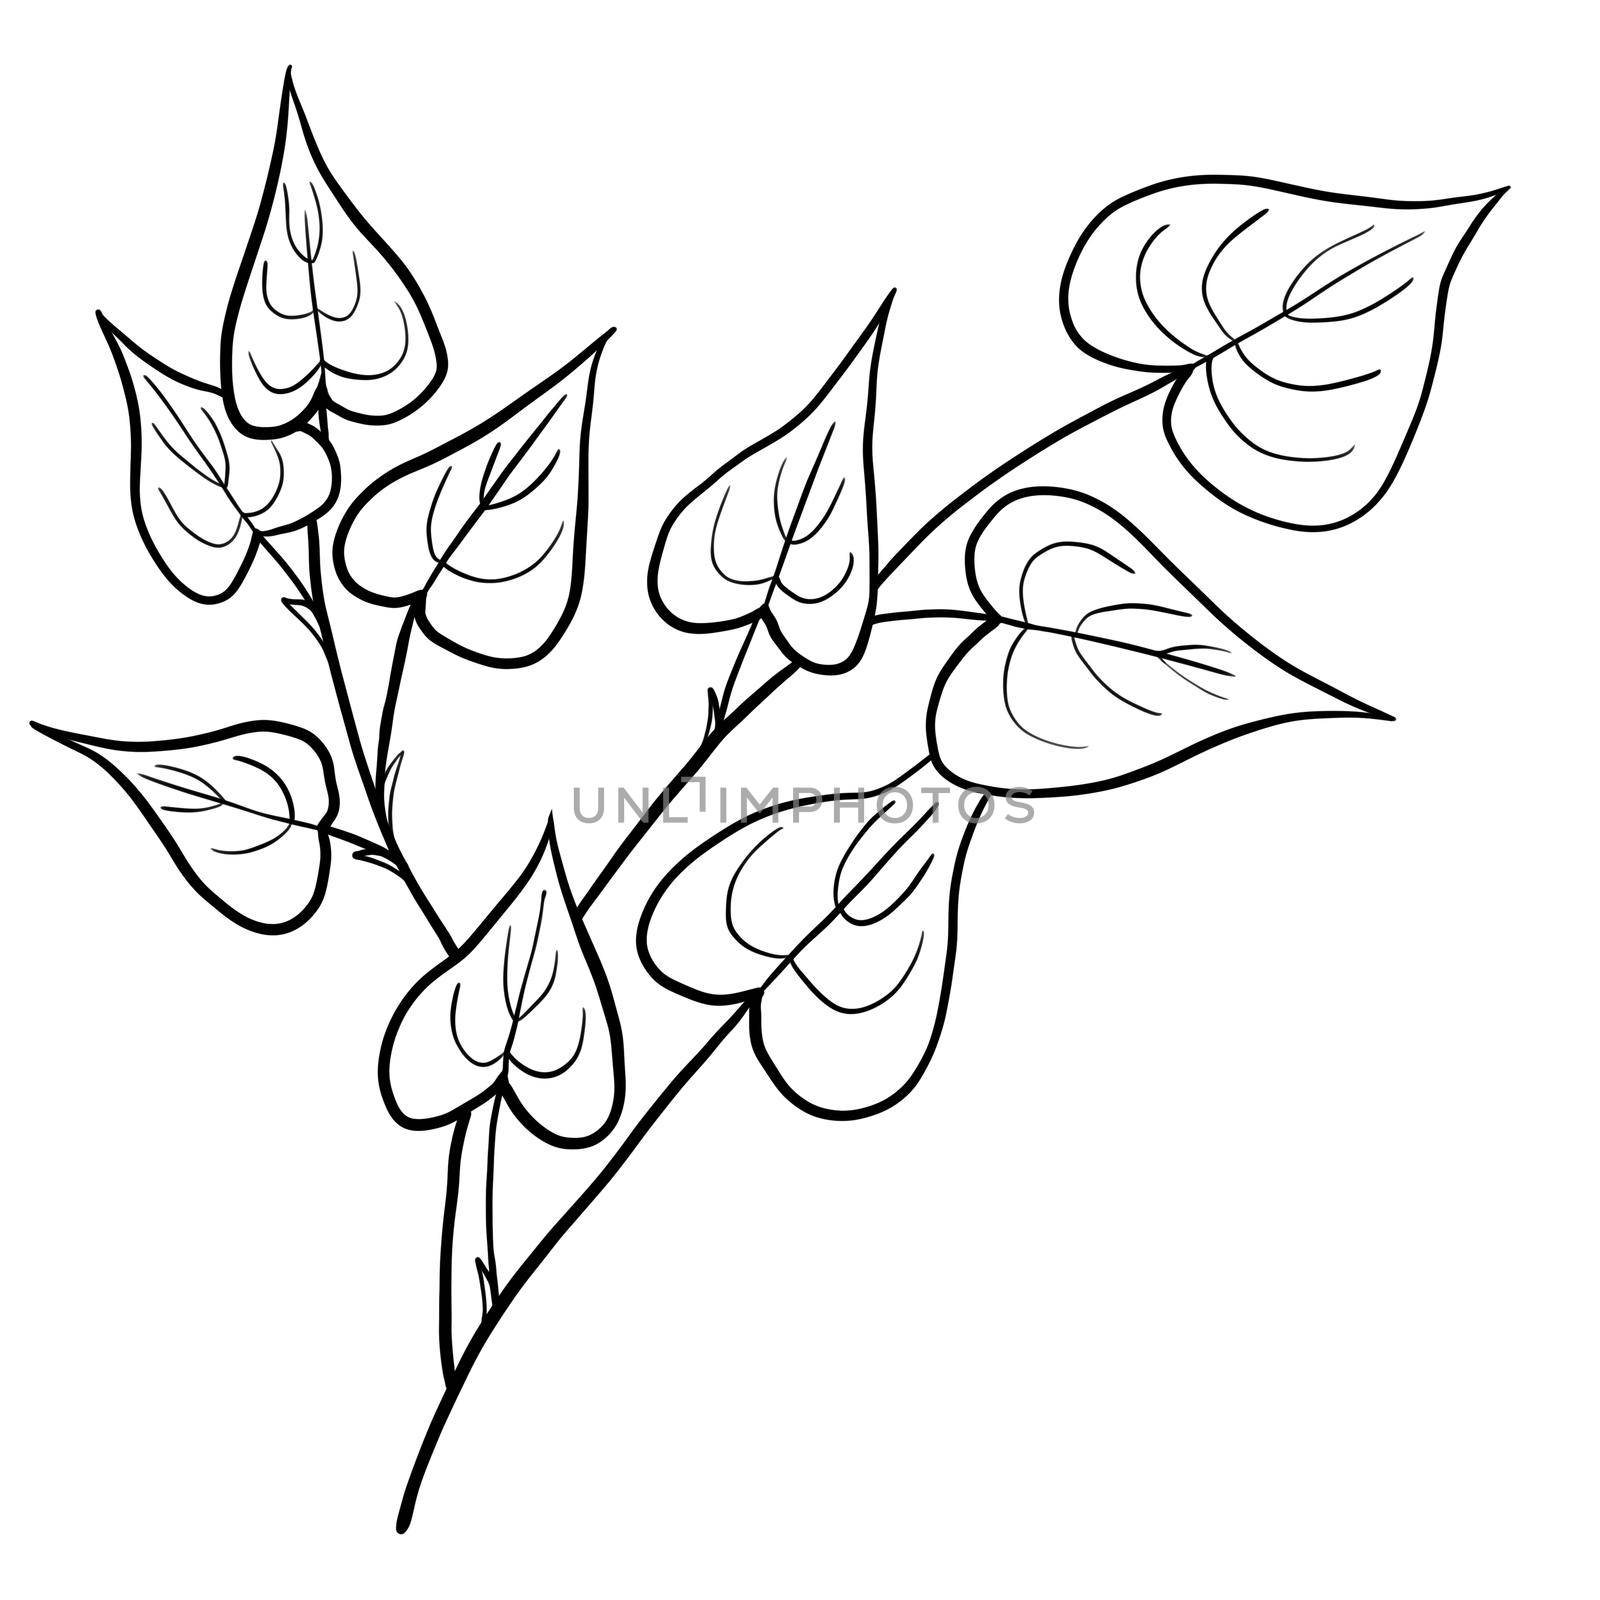 Hand drawn floral flower leaves illustration, black white elegant minimalist wedding ornament, Line art minimalism tatoo style design summer spring nature branch foliage blossom by Lagmar